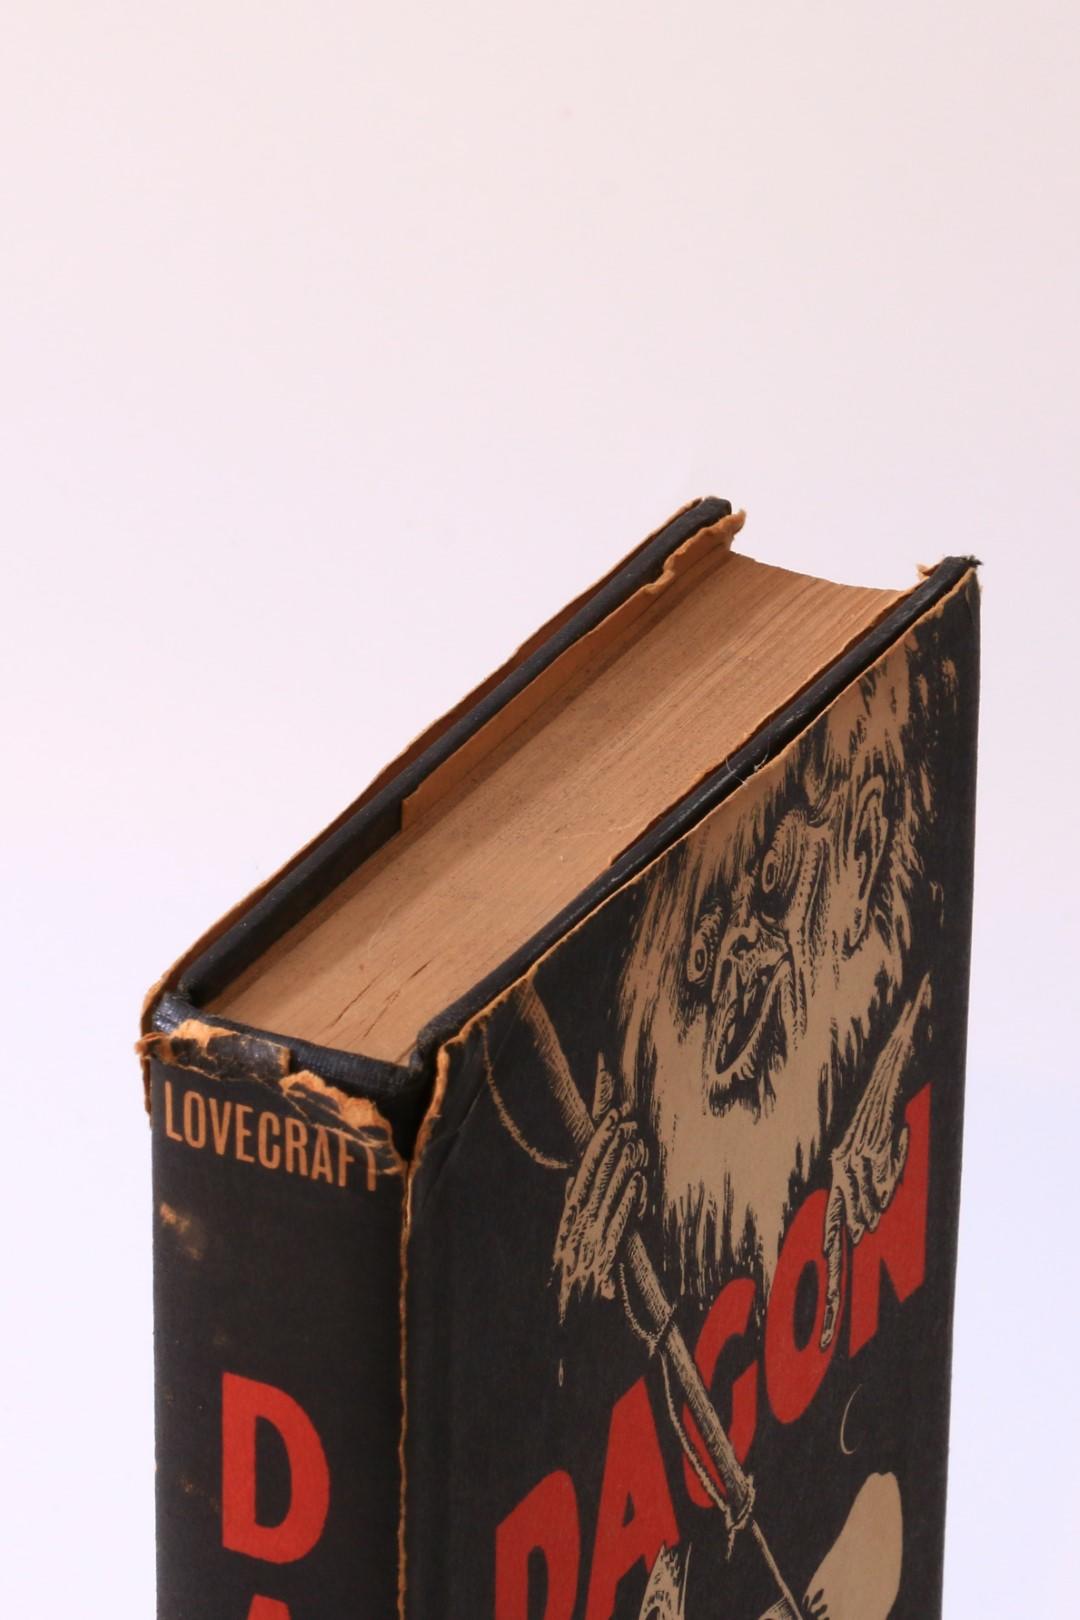 H.P. Lovecraft - Dagon - Arkham House, 1965, First Edition.